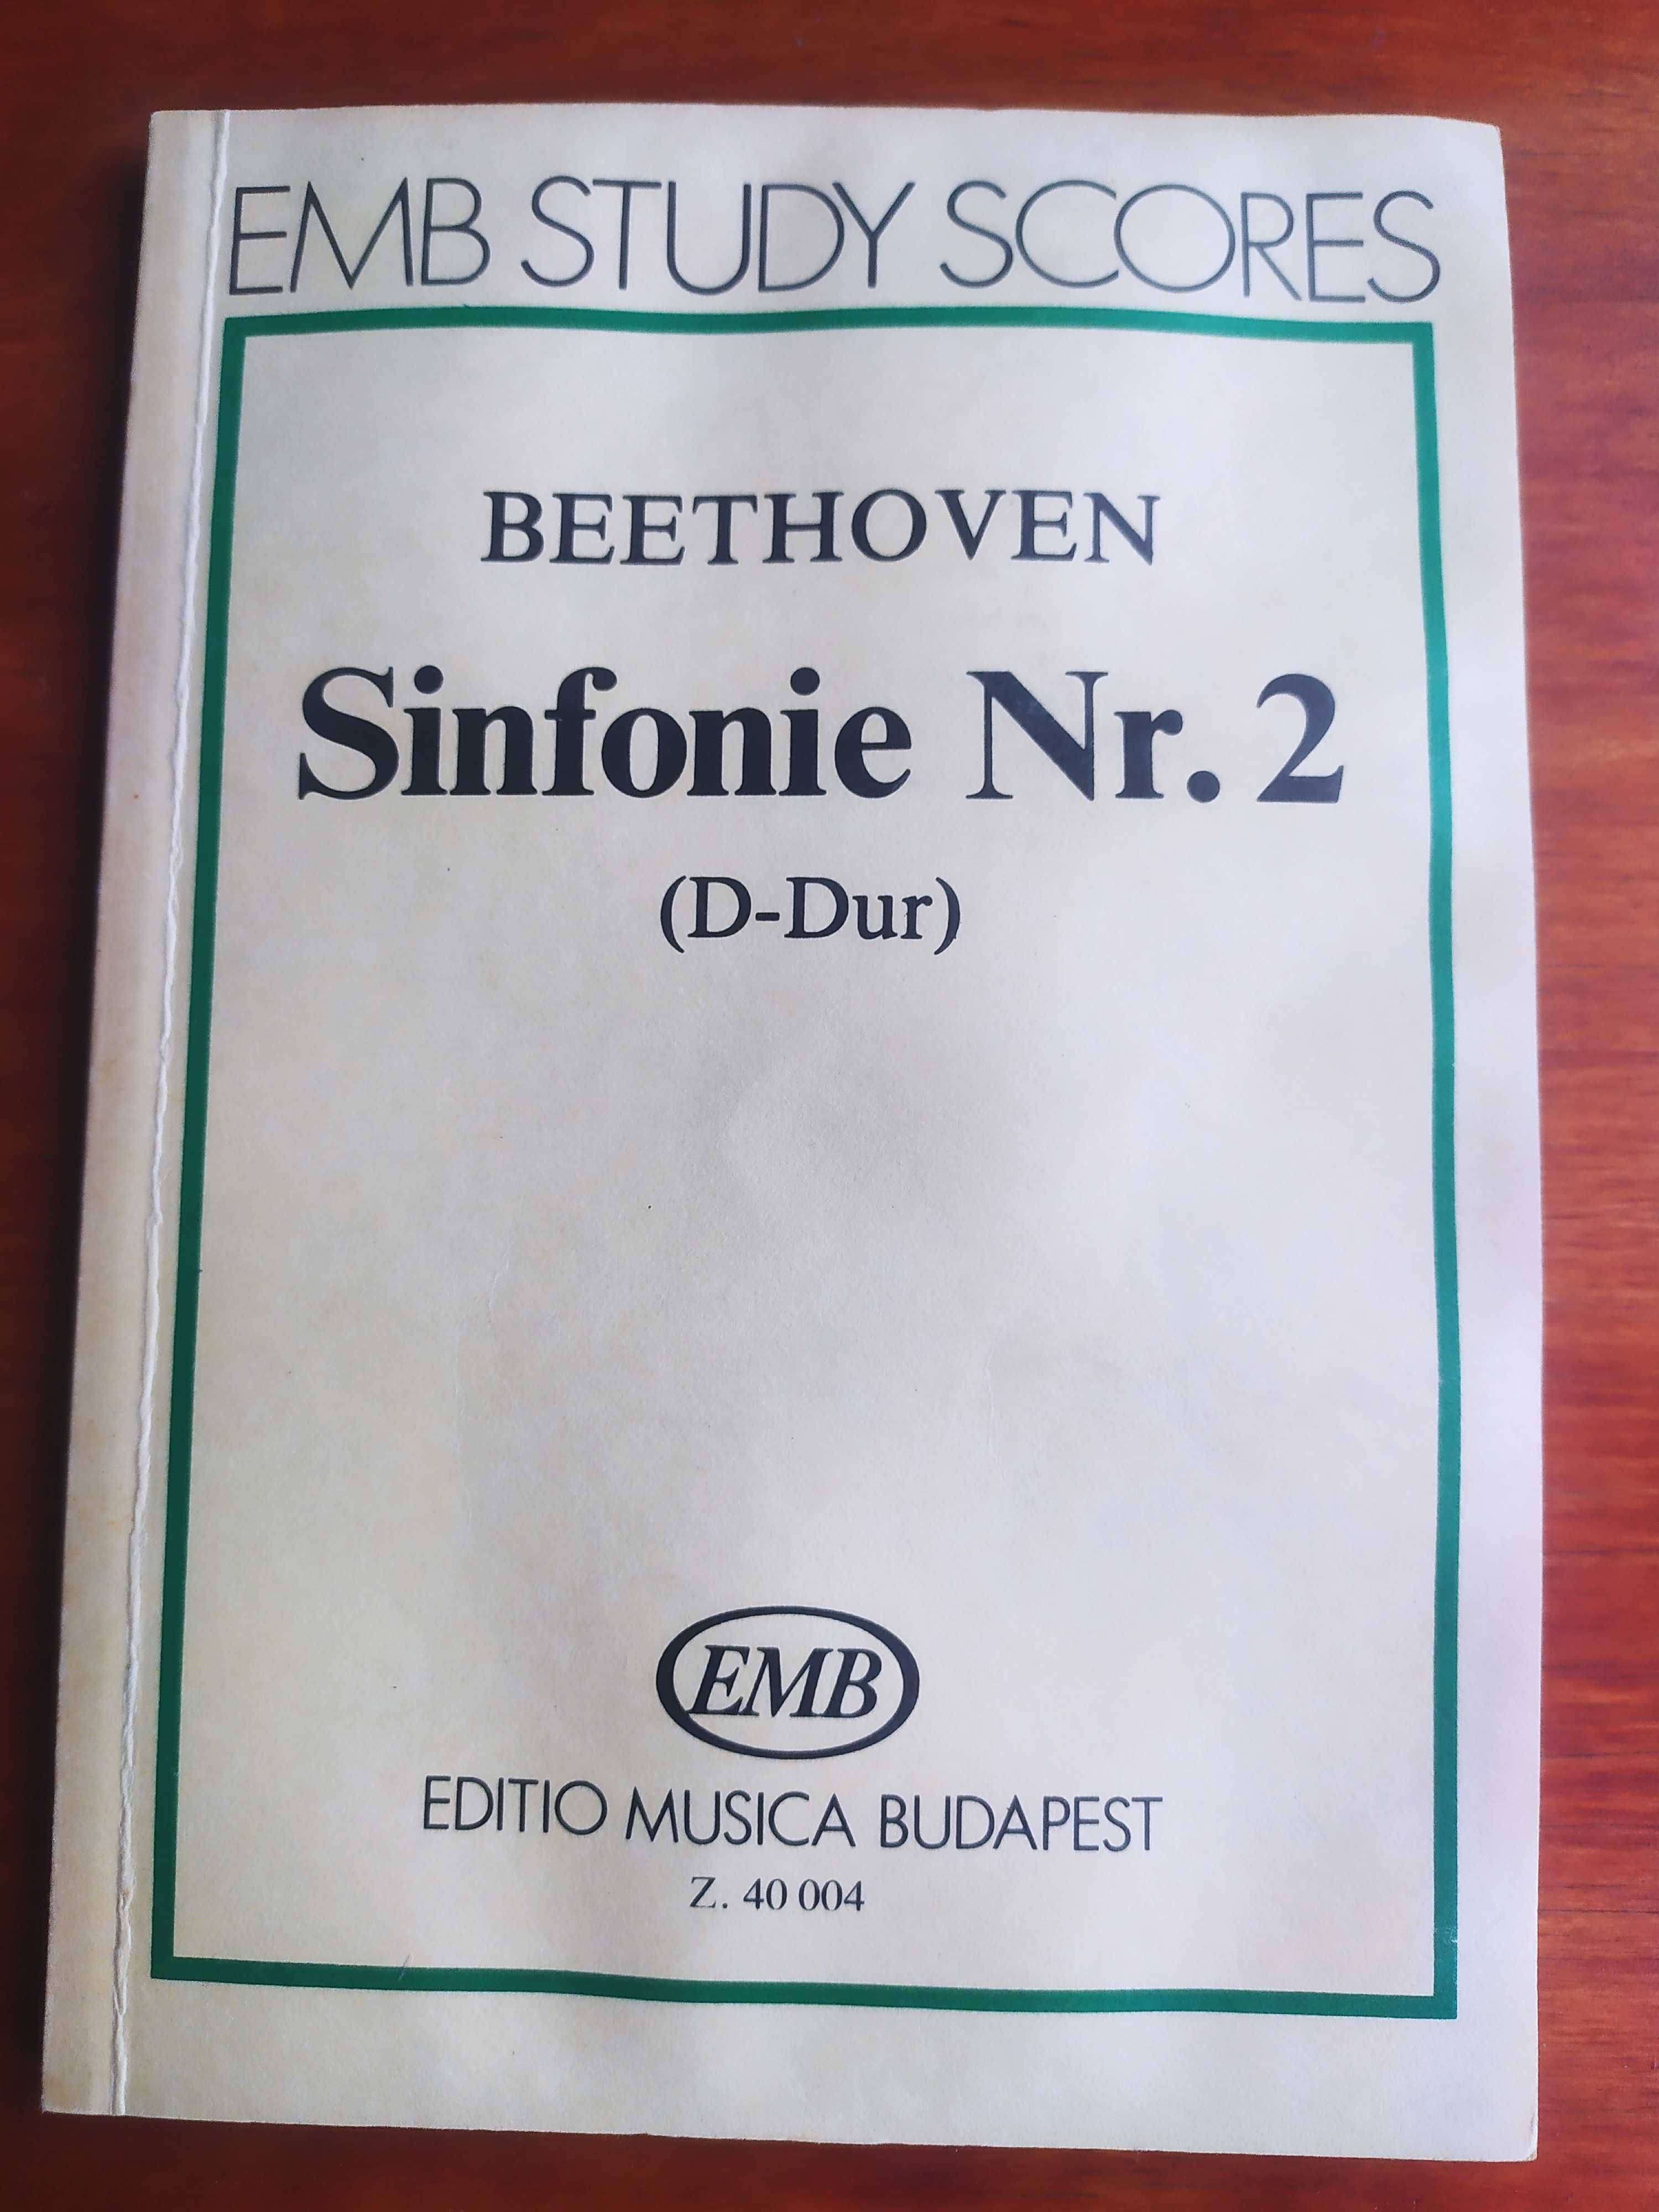 Partytura symfonii 2 ( D - Dur) opus 36 Beethovena